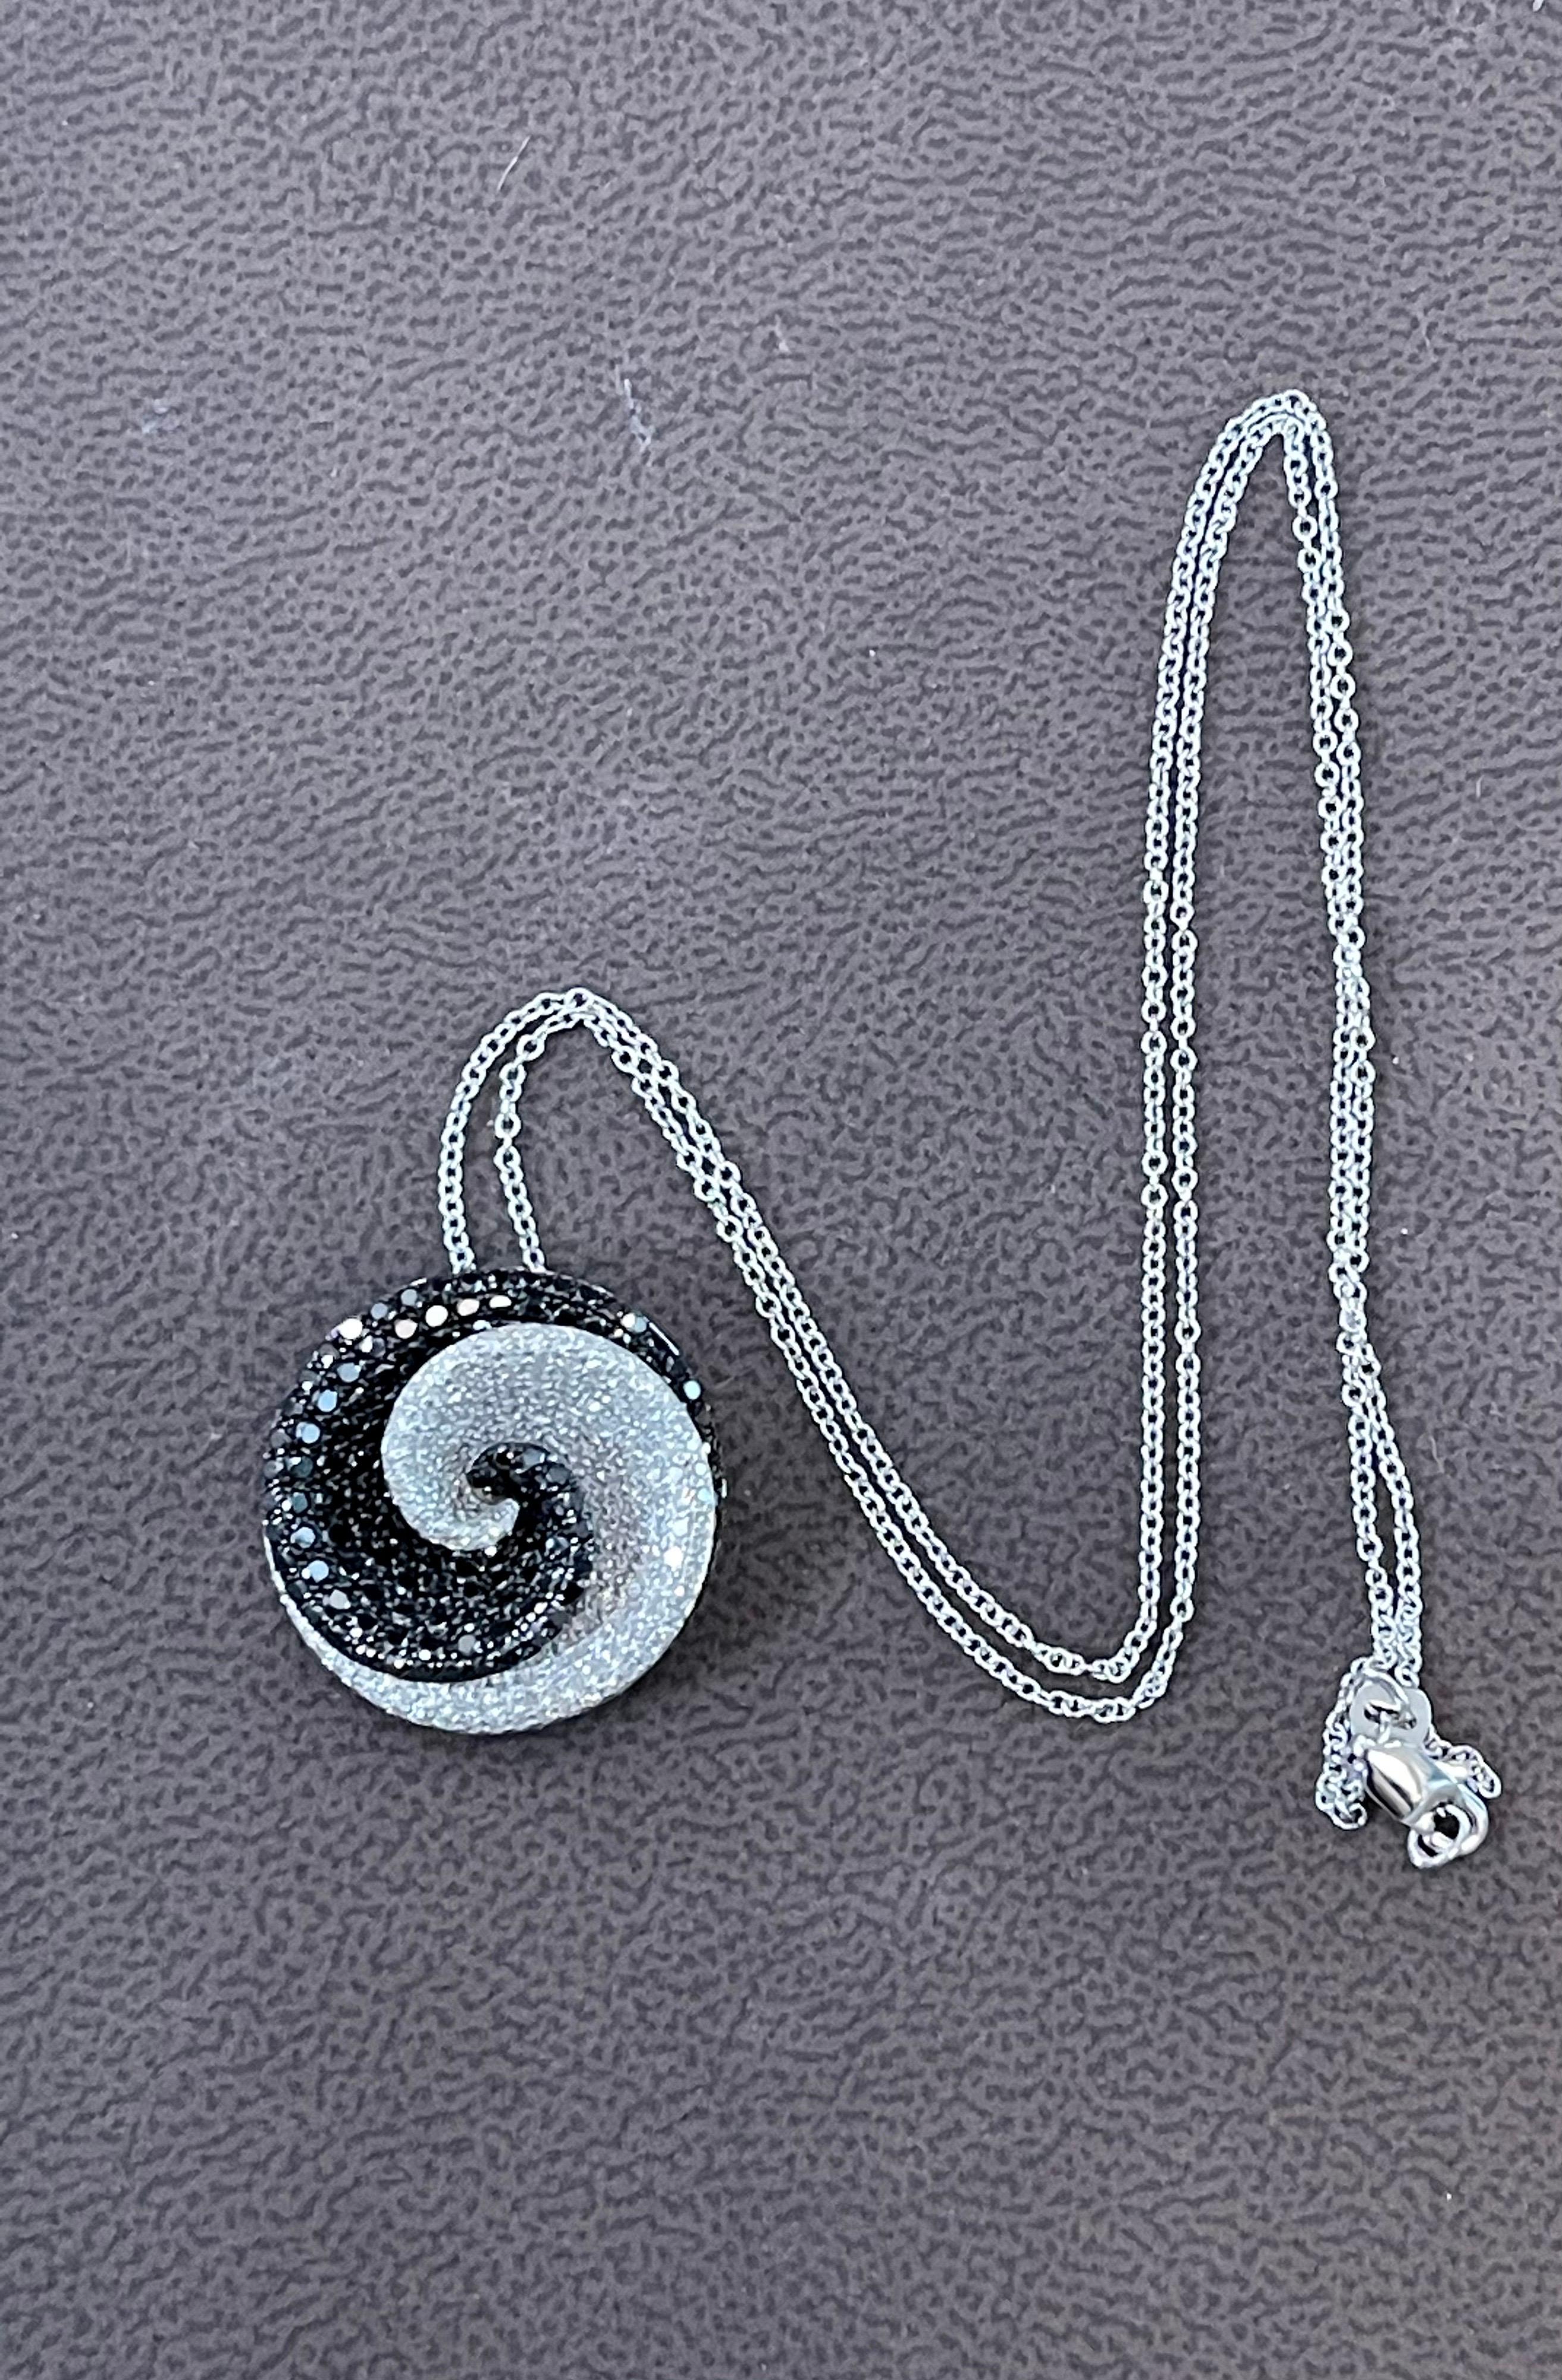 Designer Effy's Black and White Diamond Celtic Pendant /Necklace 14 Karat Gold 4